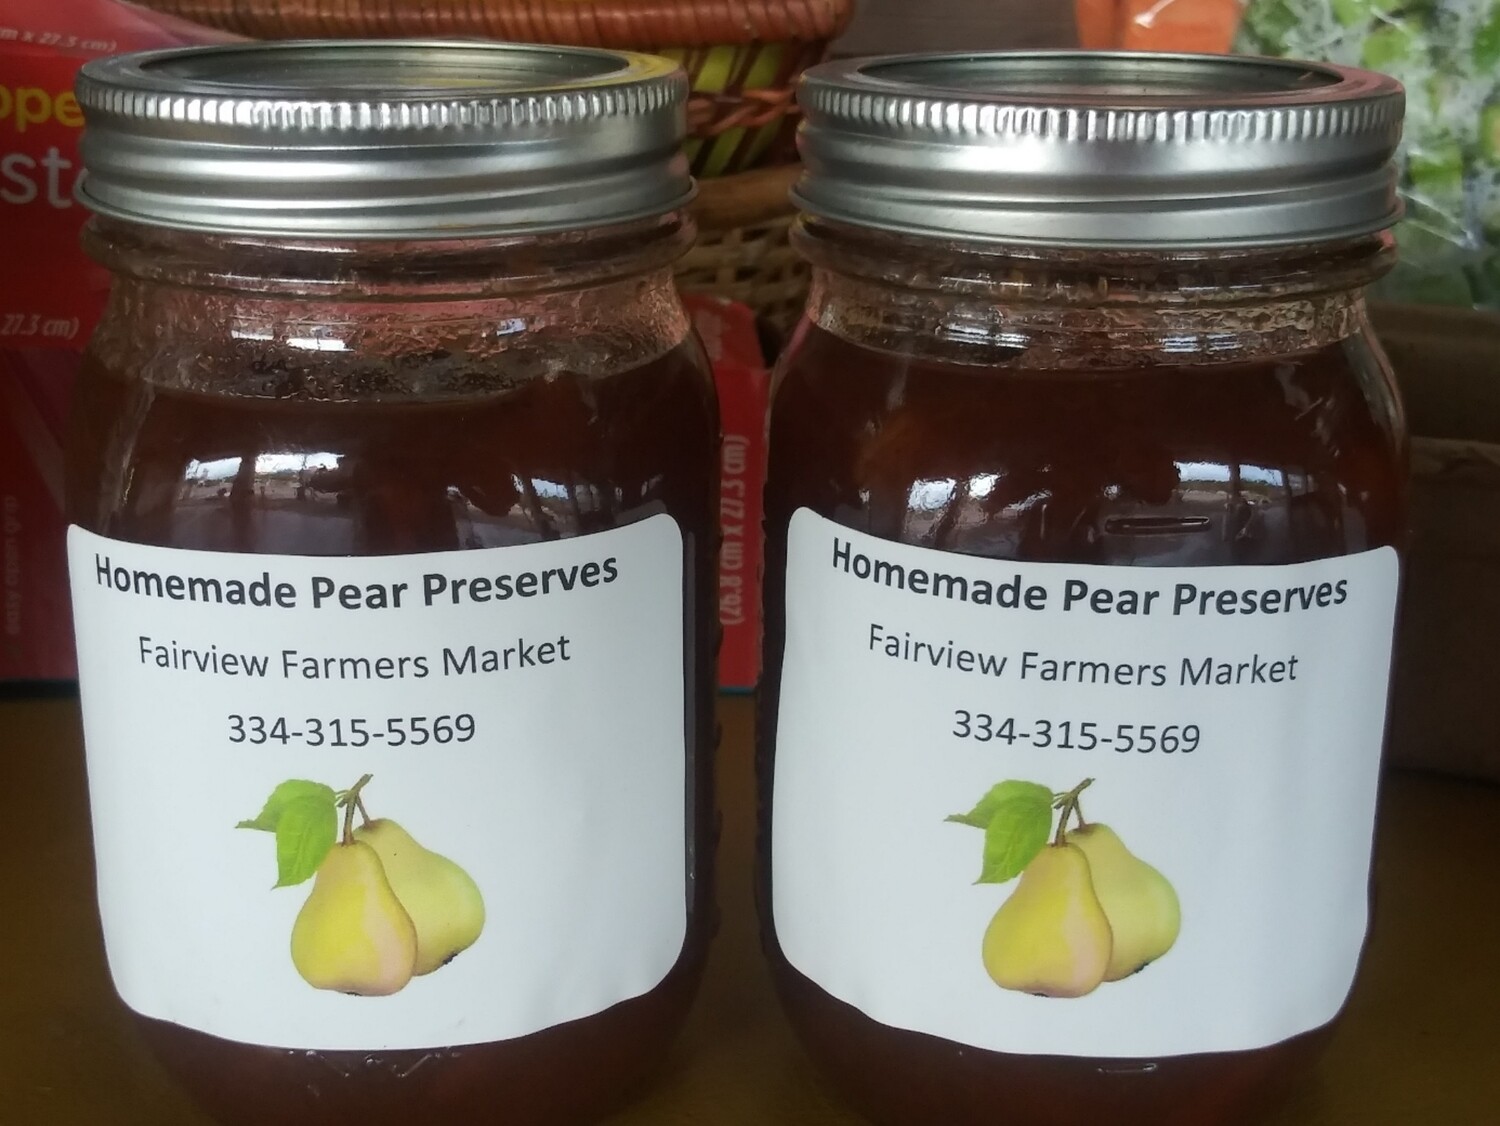 Farmers Market: Homemade Pear Preserves